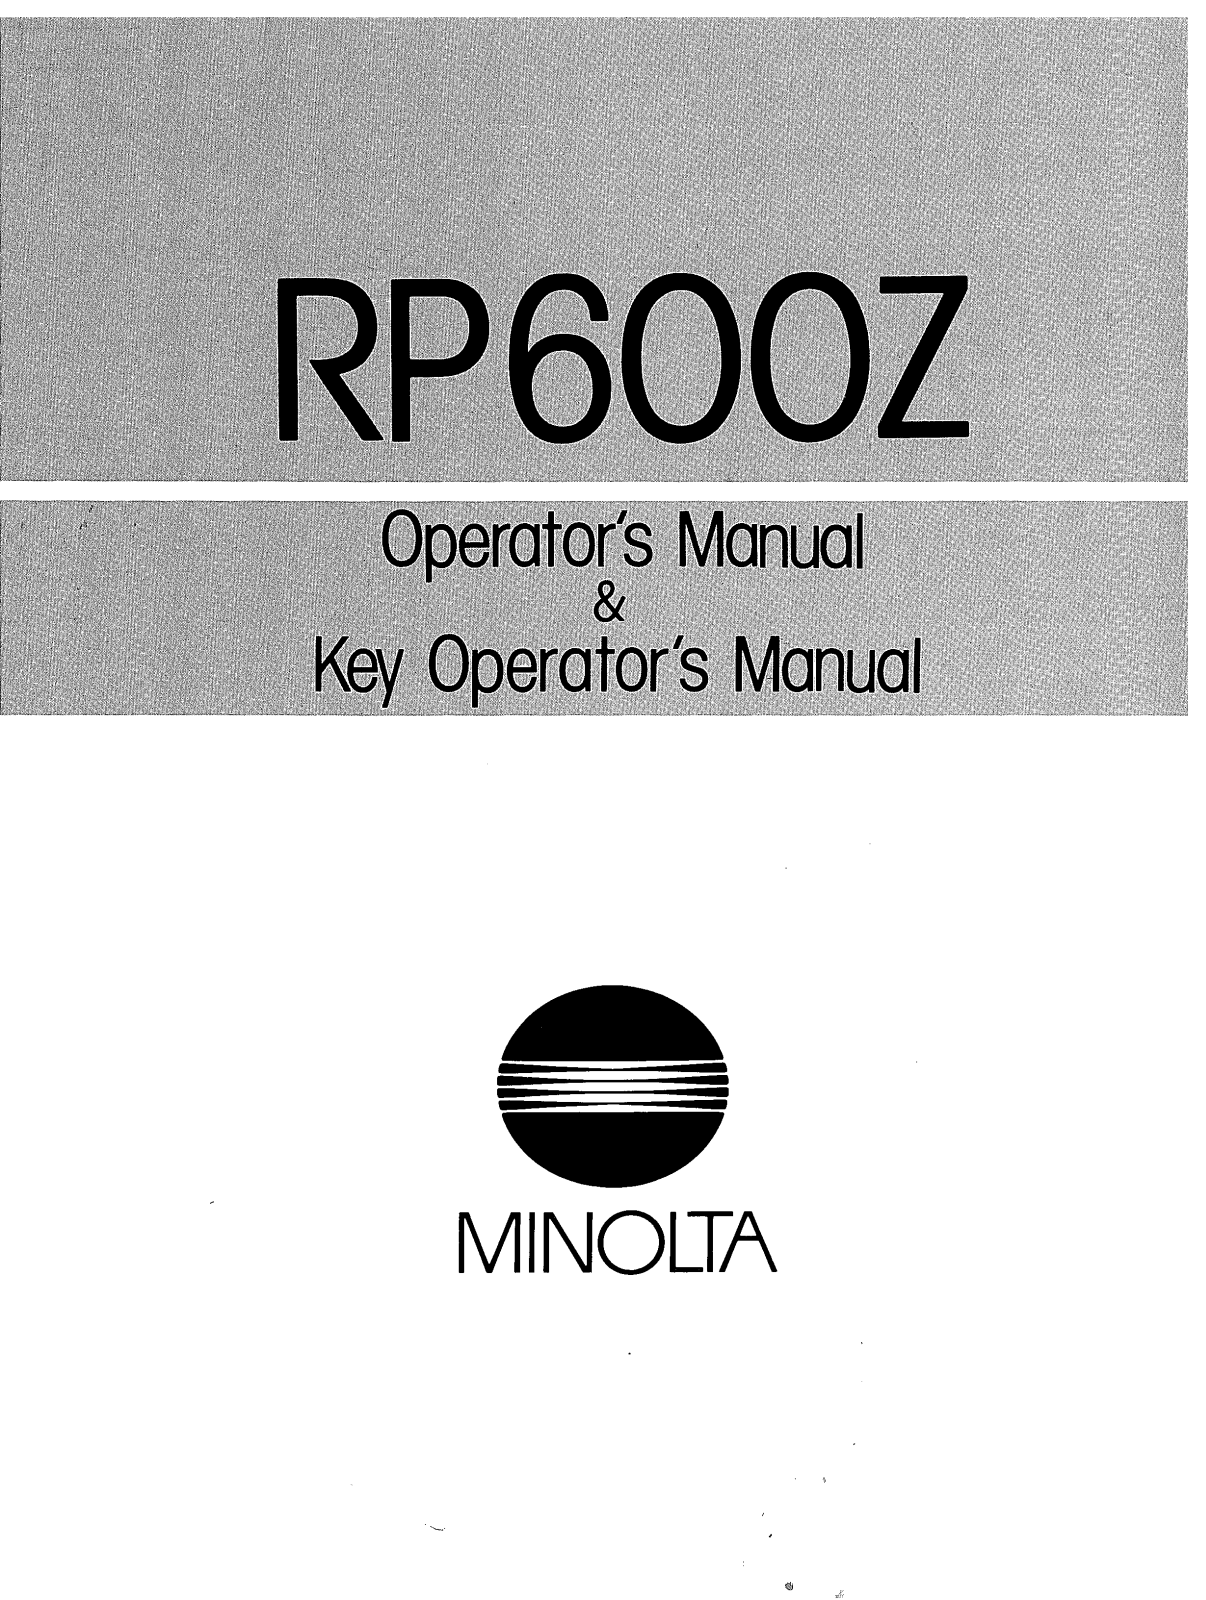 Konica Minolta RP600Z Manual